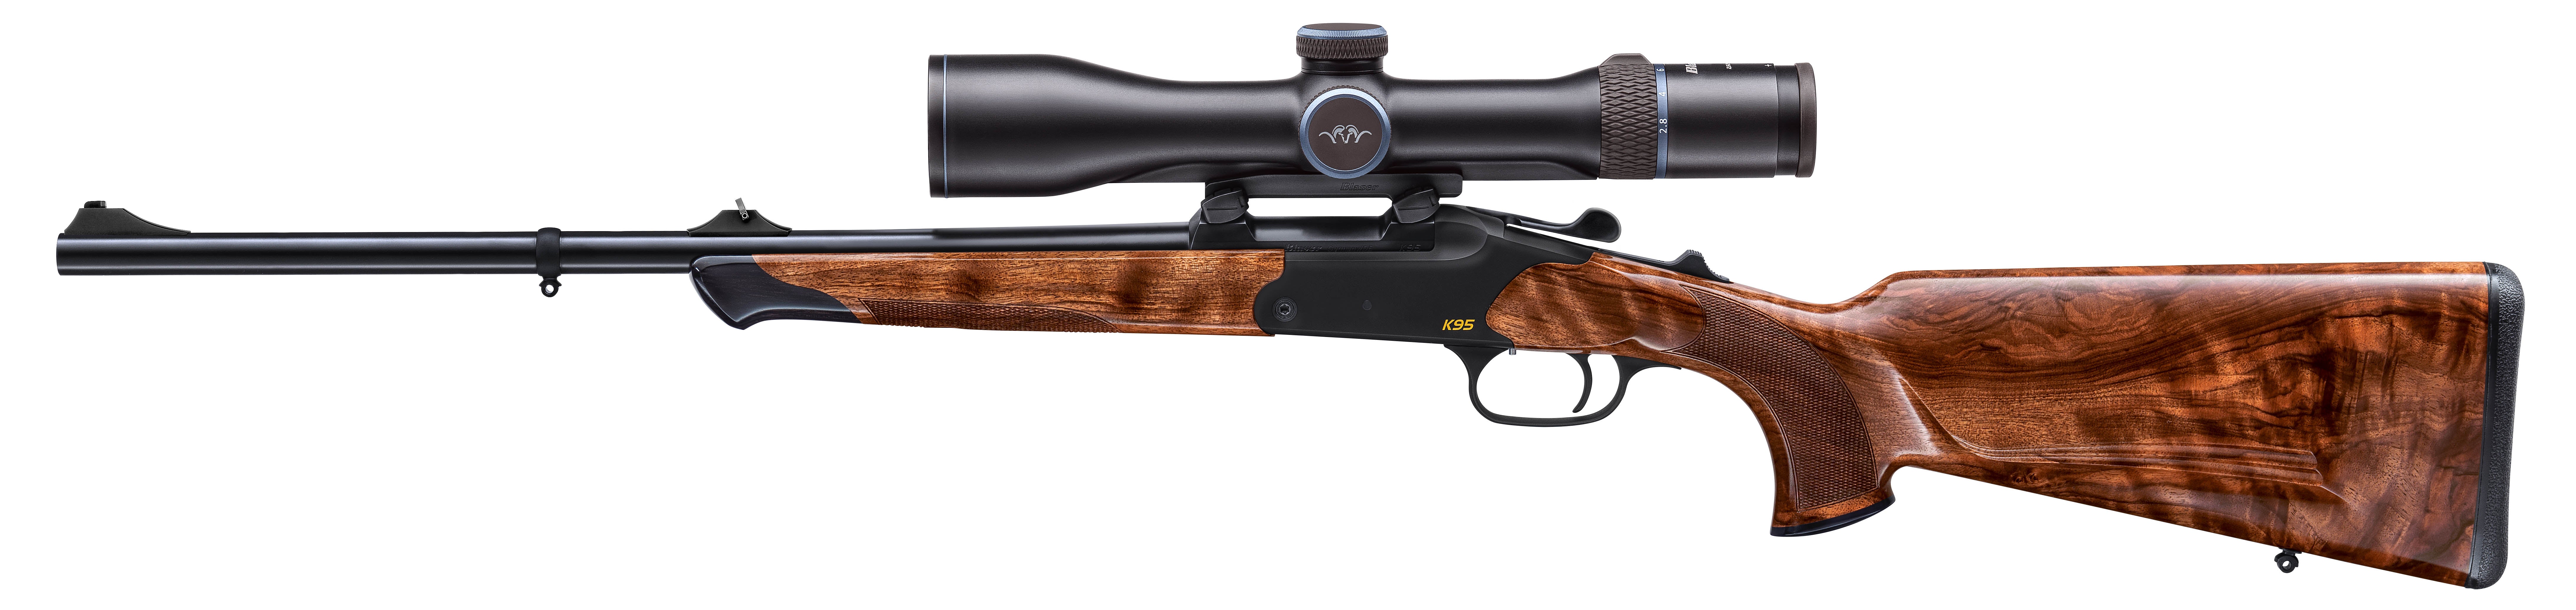 Rifle Monotiro K95